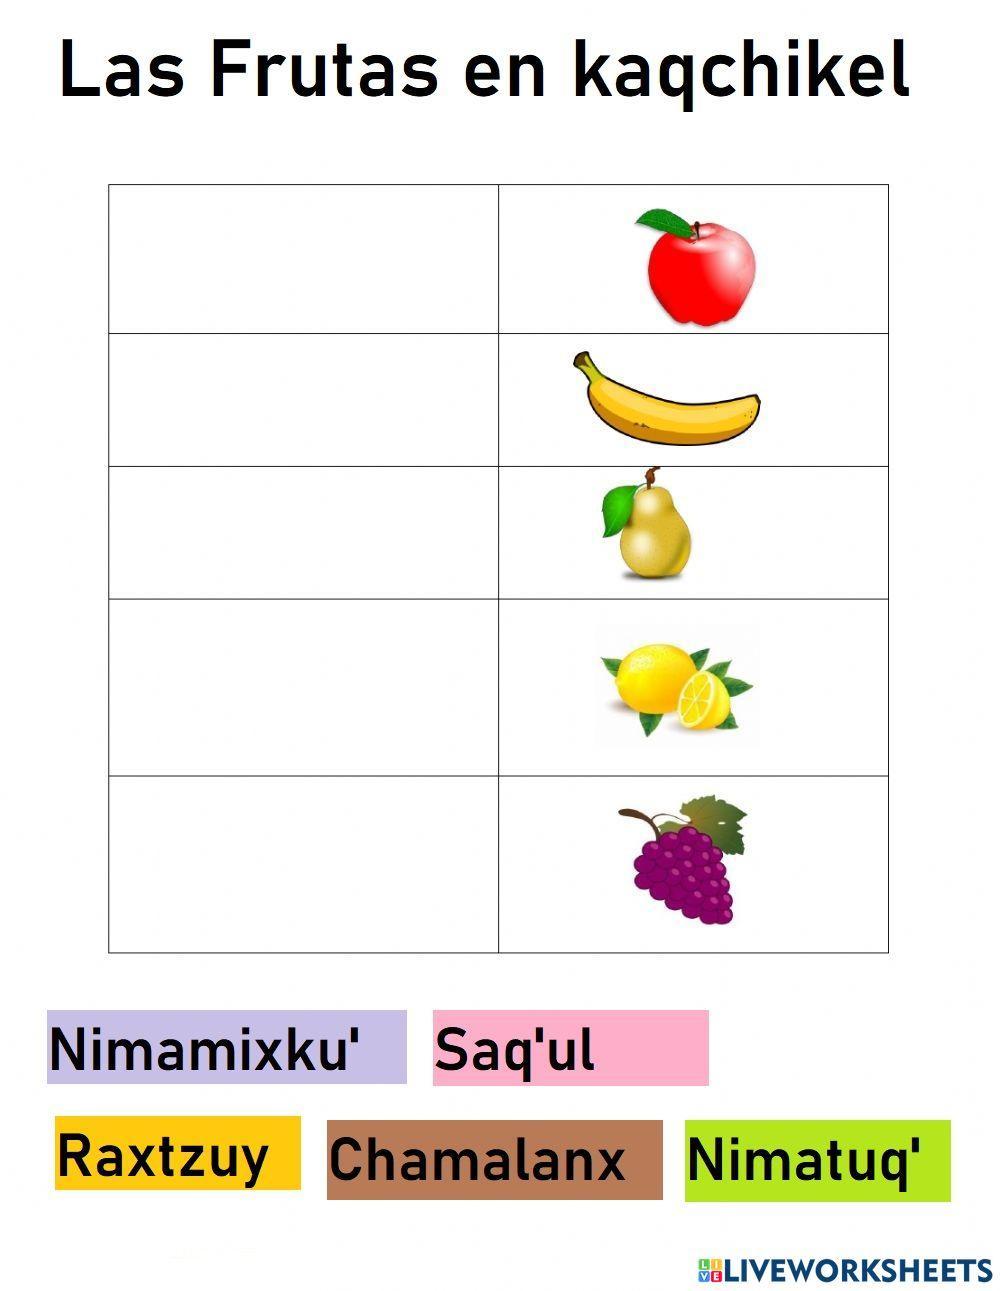 Las frutas en Kaqchikel